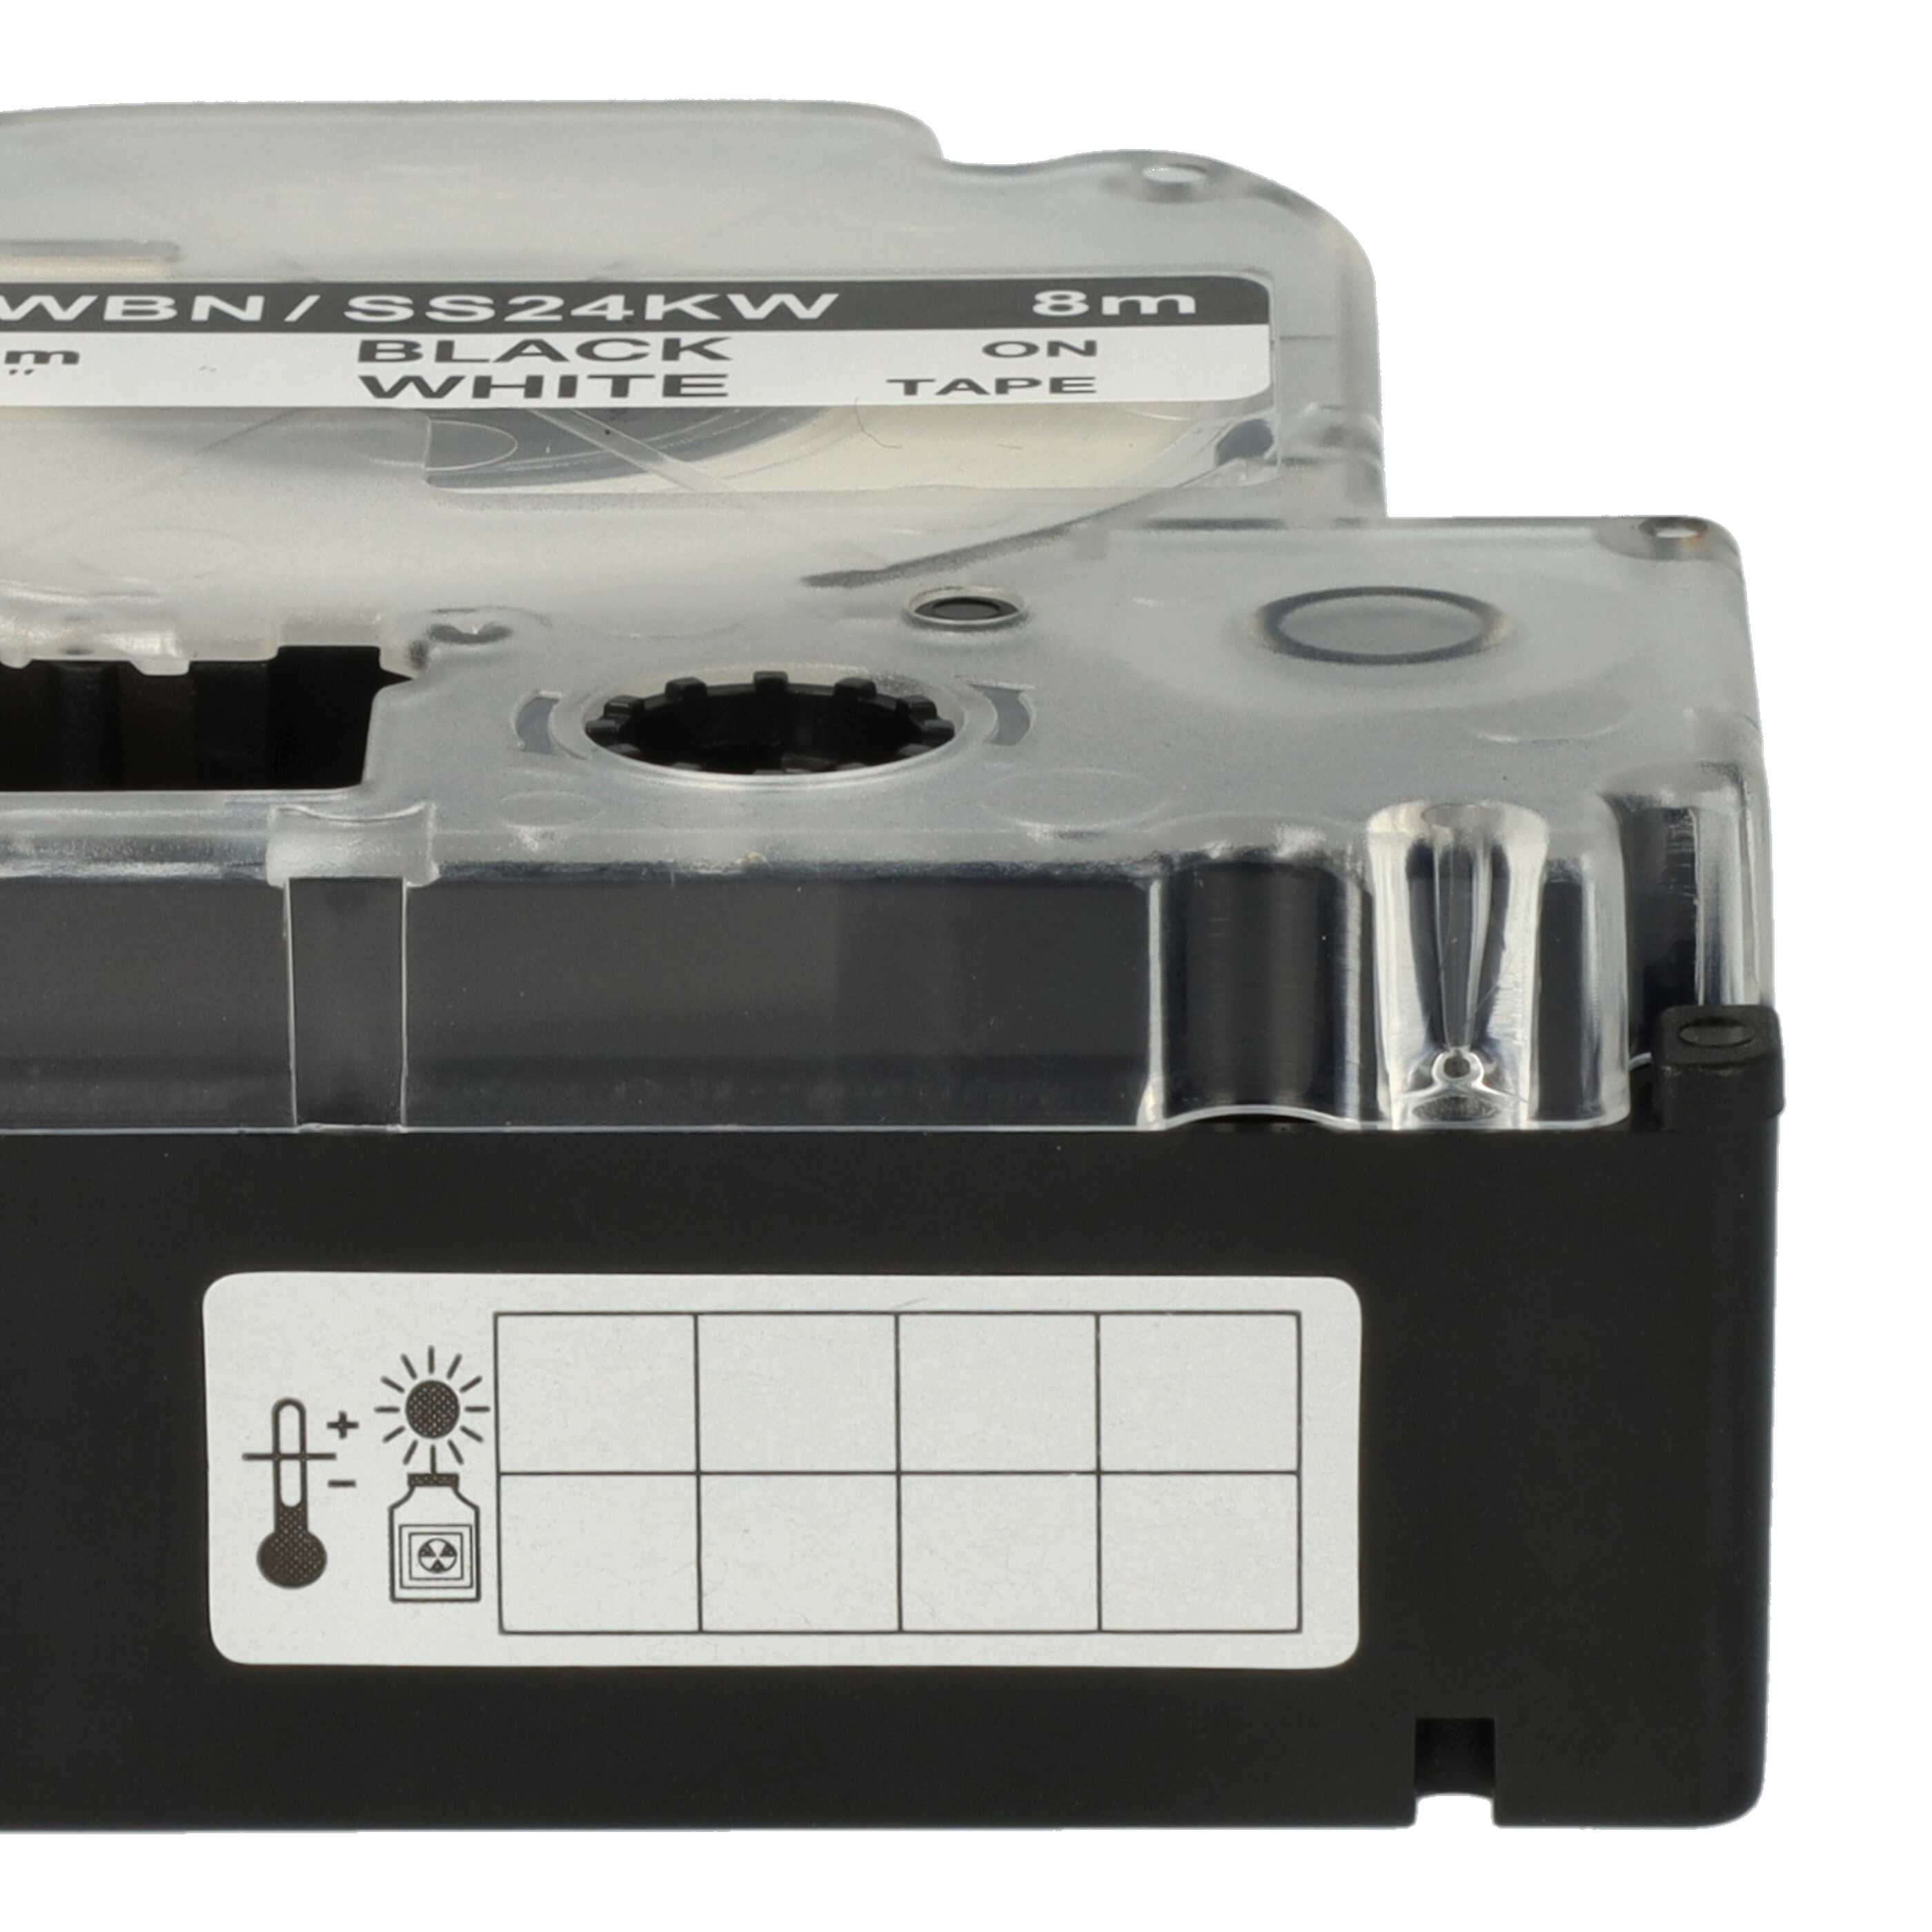 10x Casete cinta escritura reemplaza Epson LC-6WBN Negro su Blanco